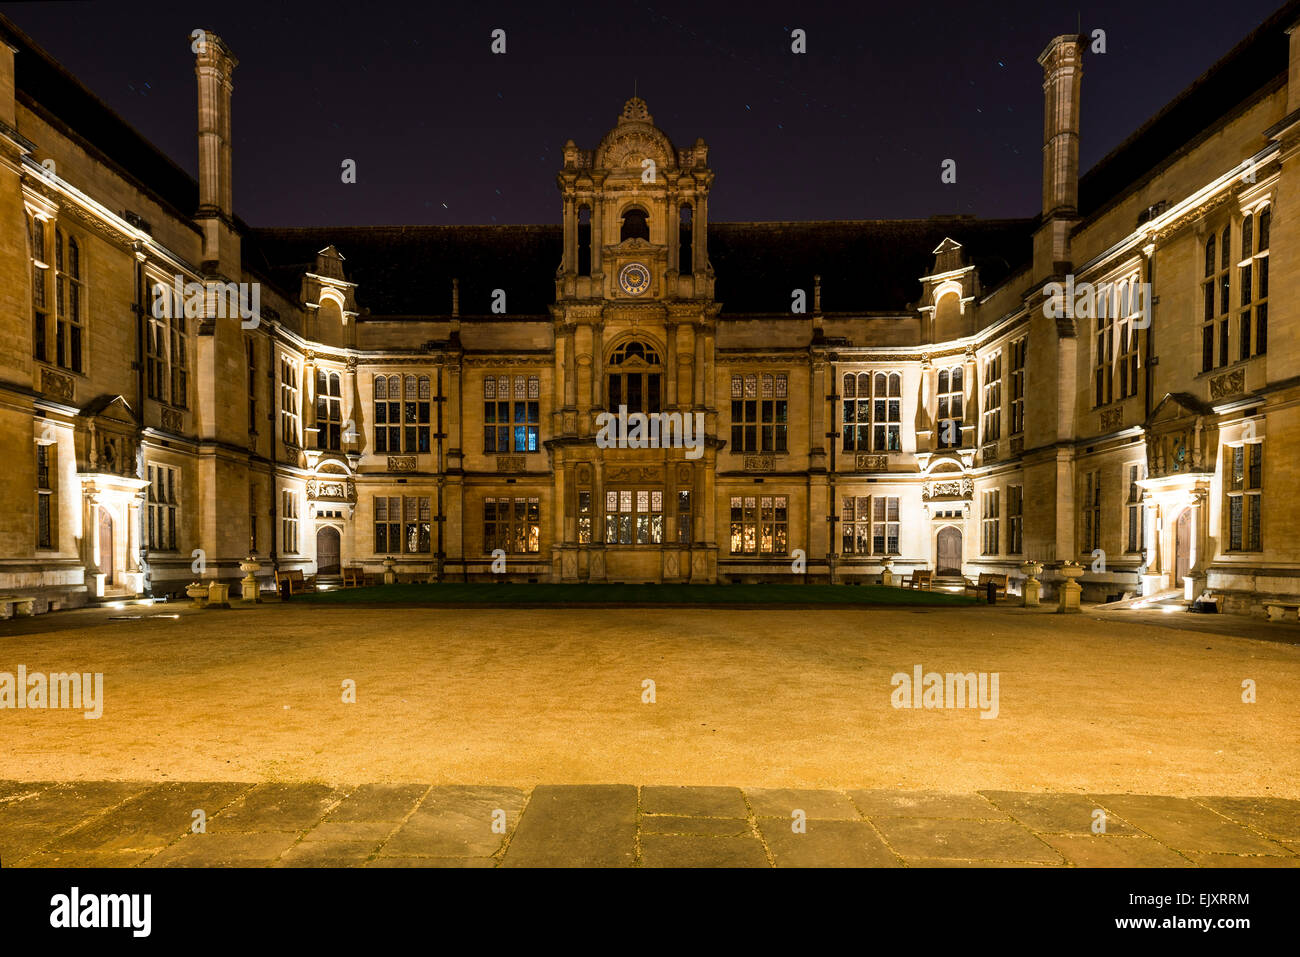 The Exam Schools of Oxford University seen at night Stock Photo